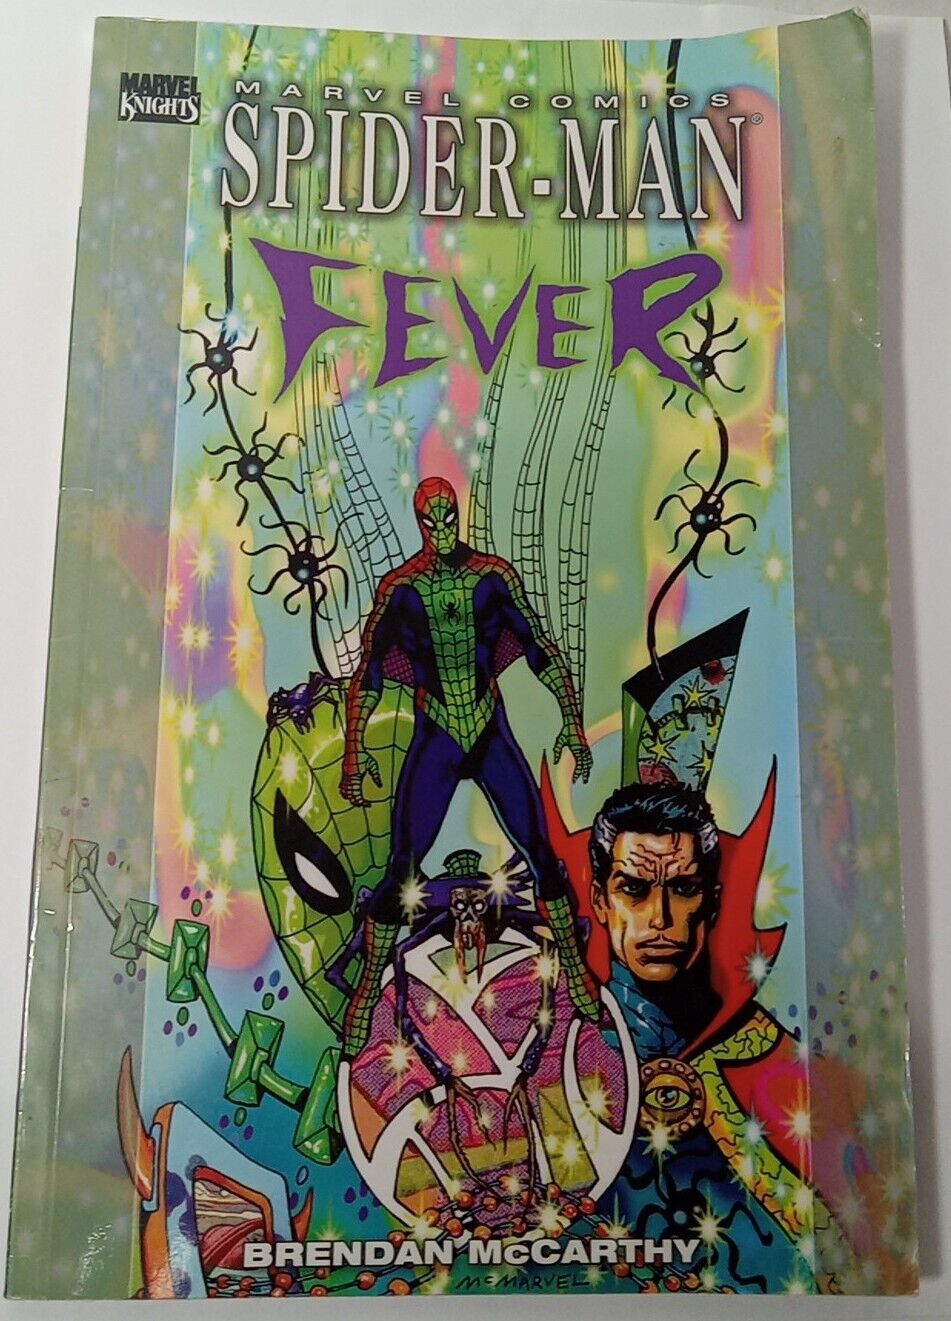 Marvel Comics Spider-Man Fever #1 June 2010 Brendan McCarthy Cover